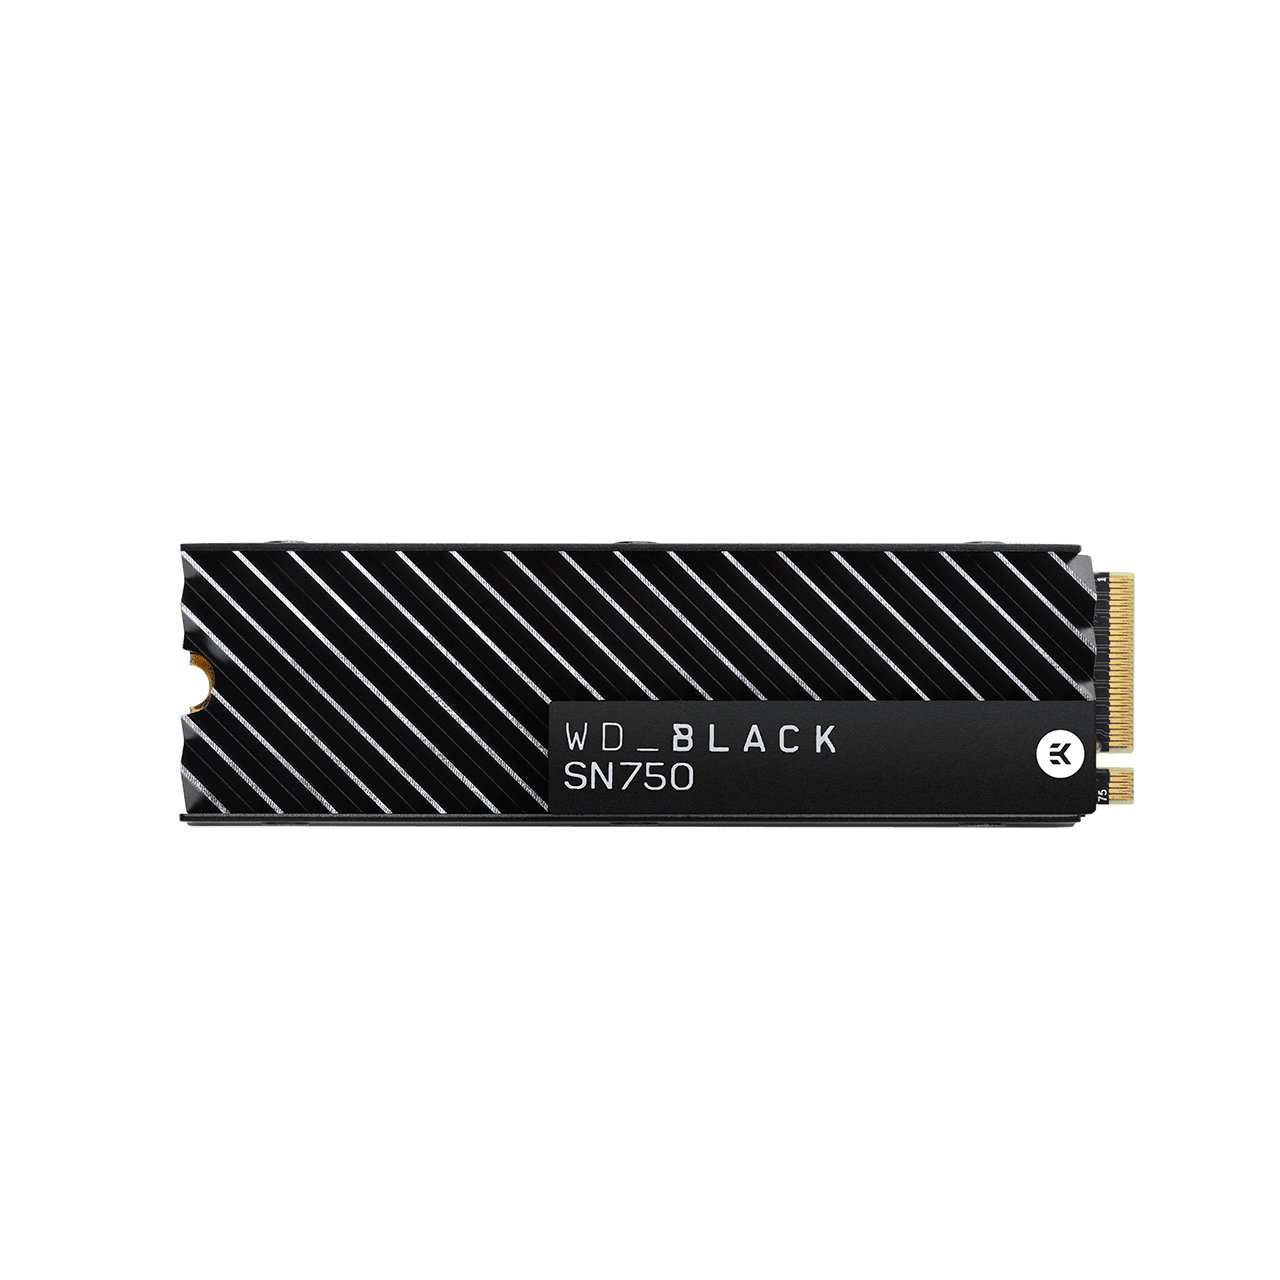 WD_BLACK SN750 NVMe SSD 500GB with Heatsink - Image3